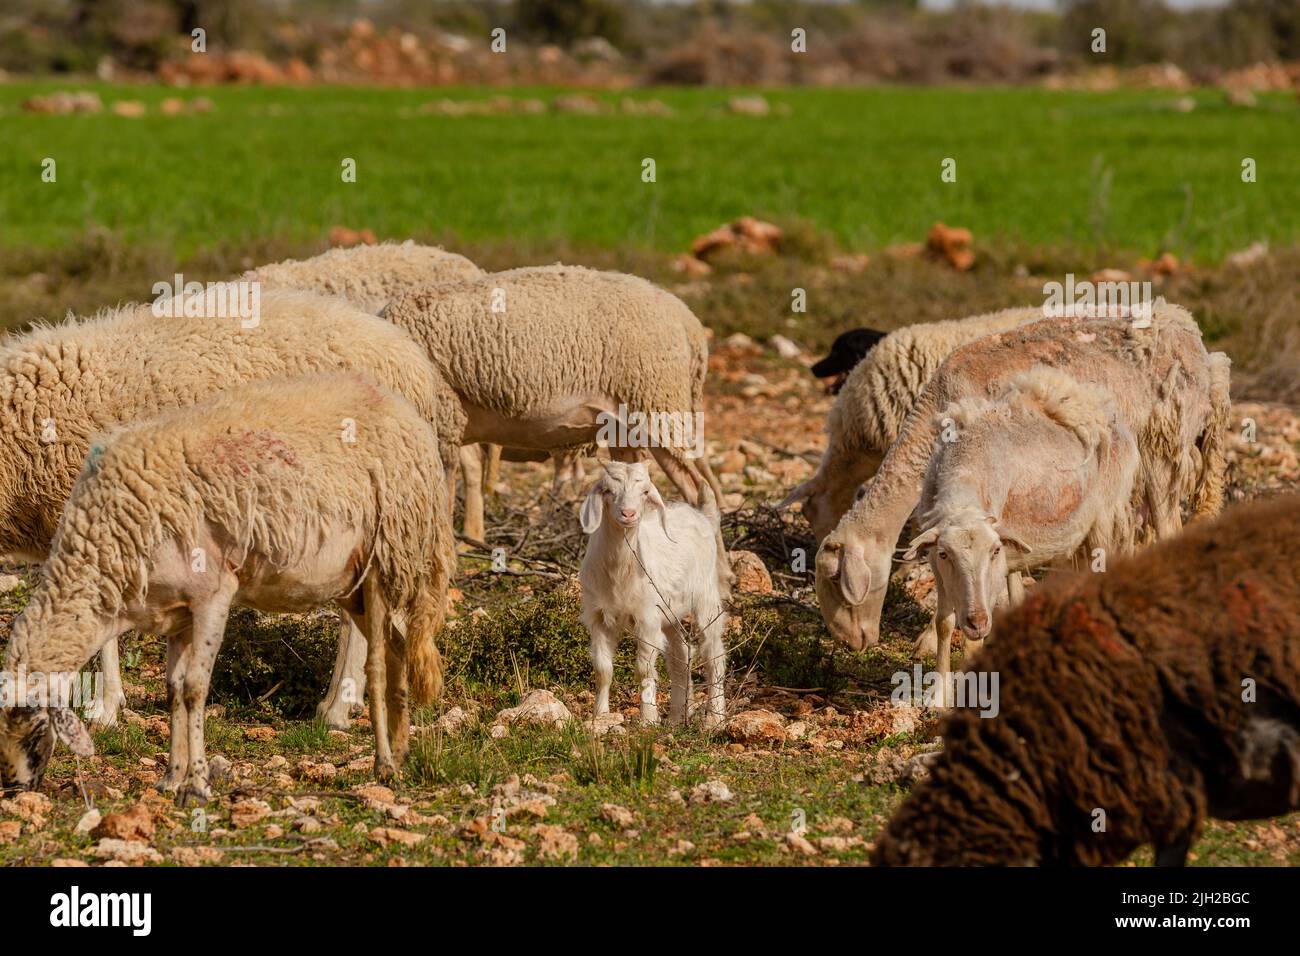 A goat kid among the sheep Stock Photo